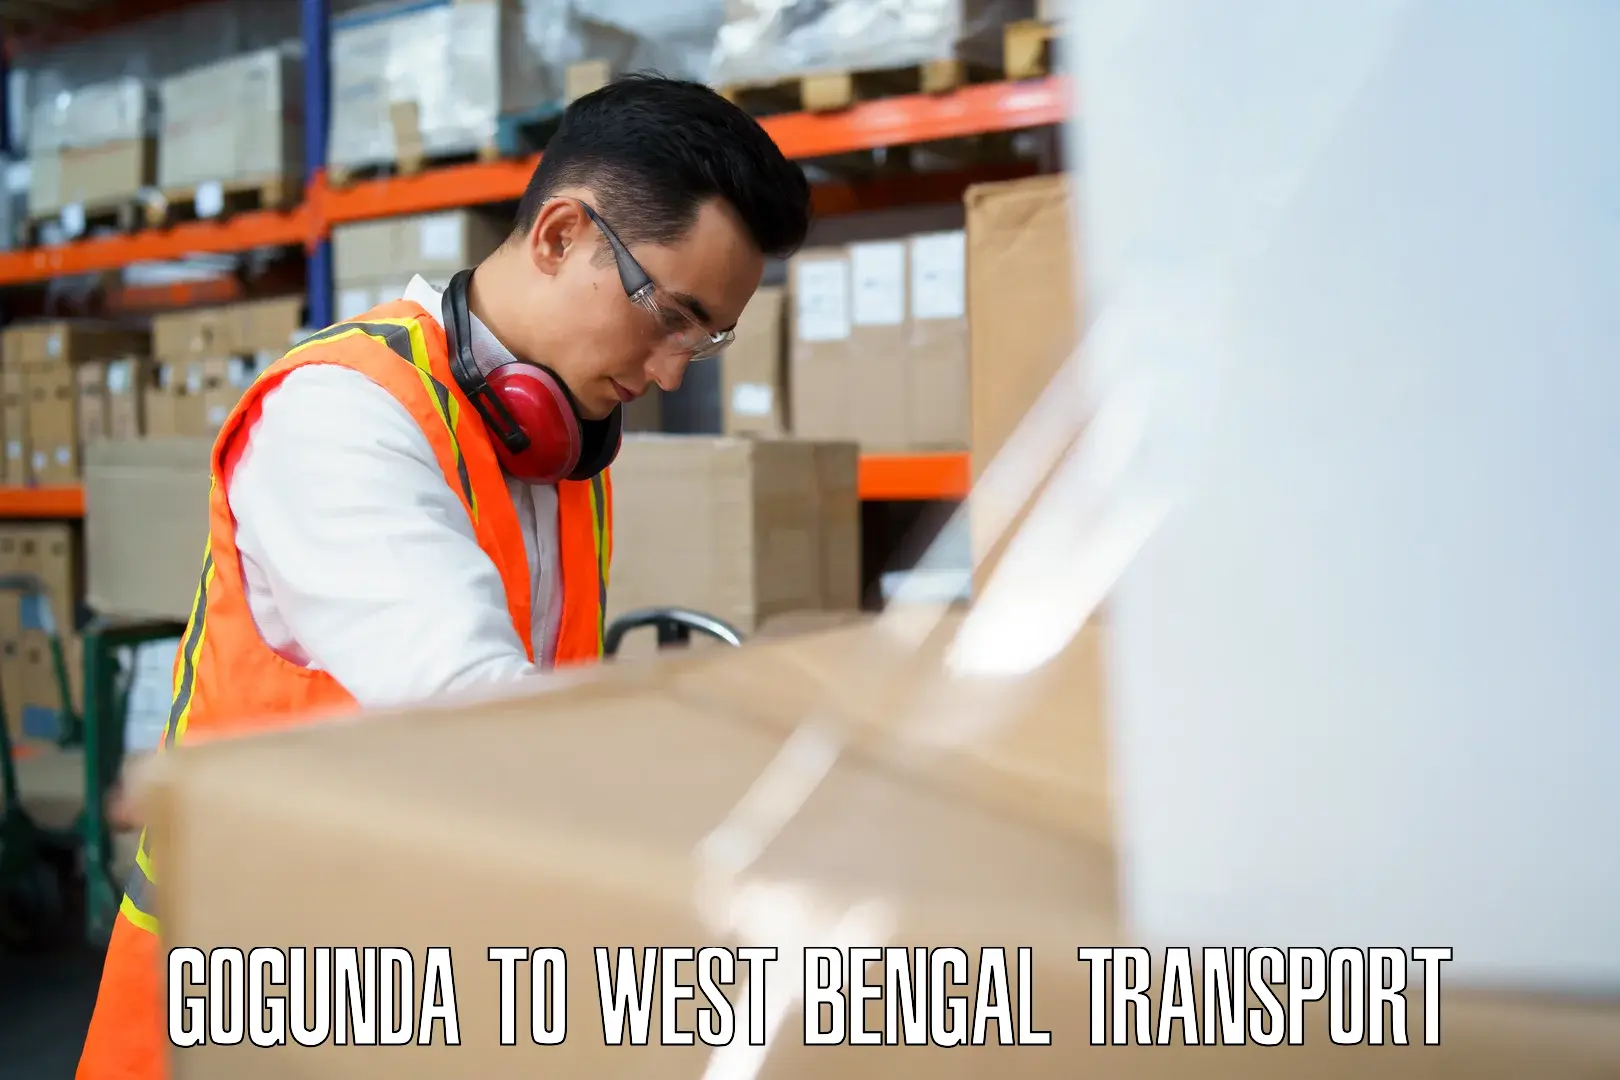 Daily transport service Gogunda to West Bengal